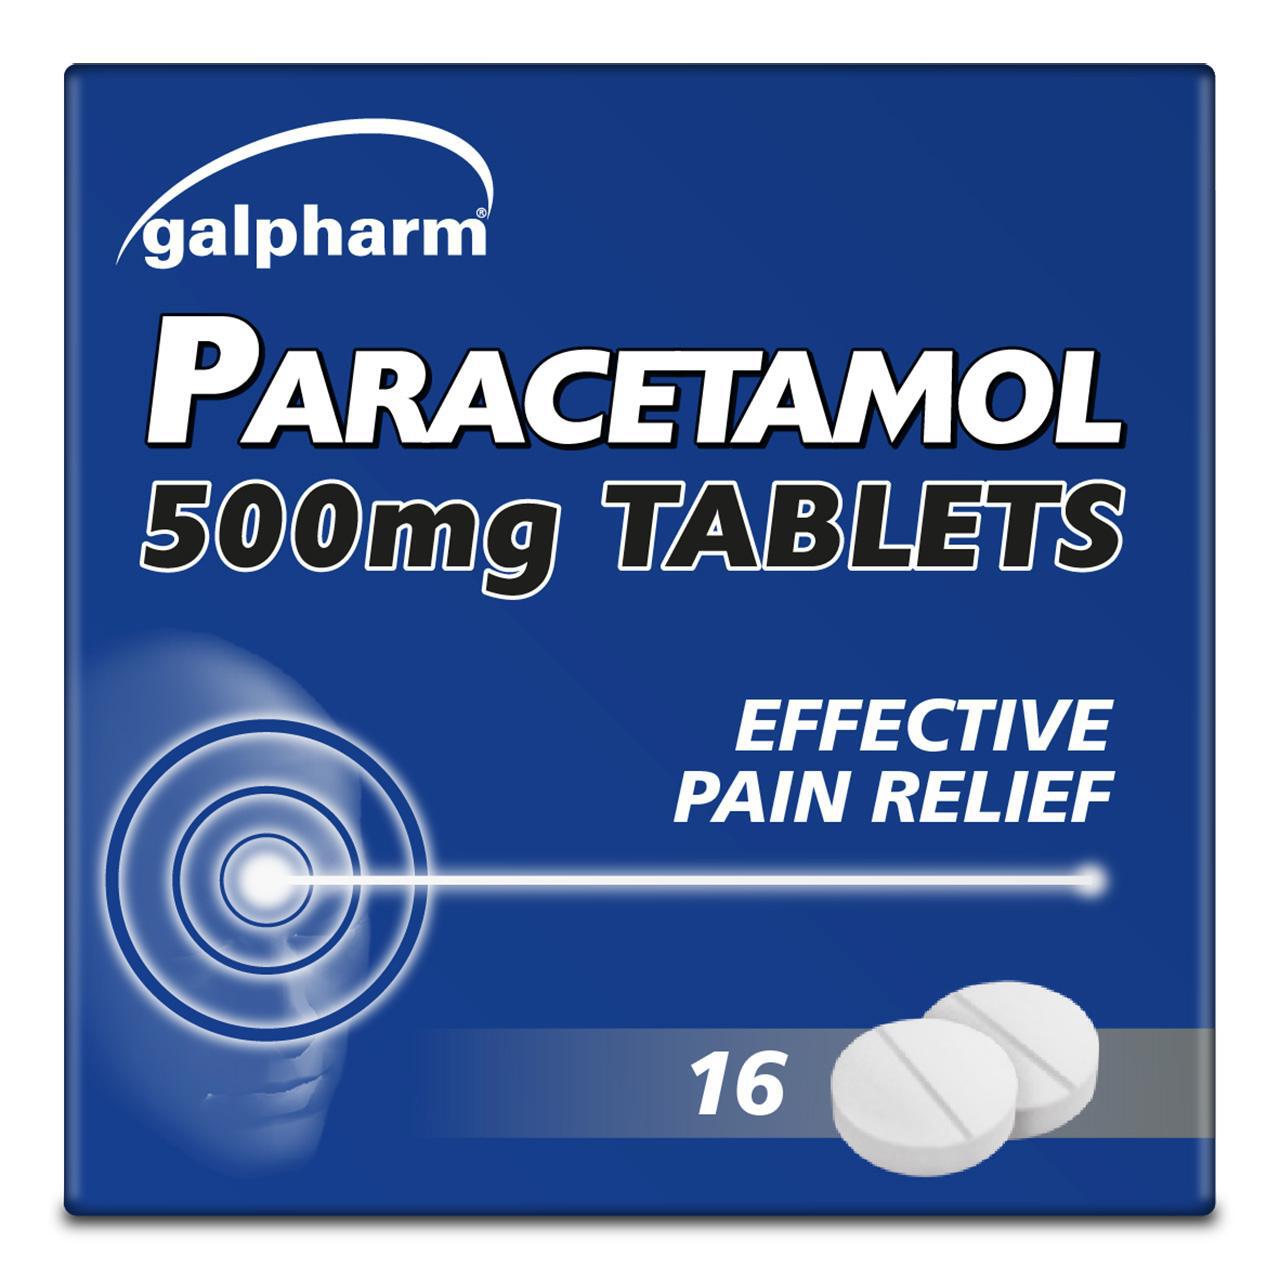 Galpharm Paracetamol 500mg Tablets 16 per pack